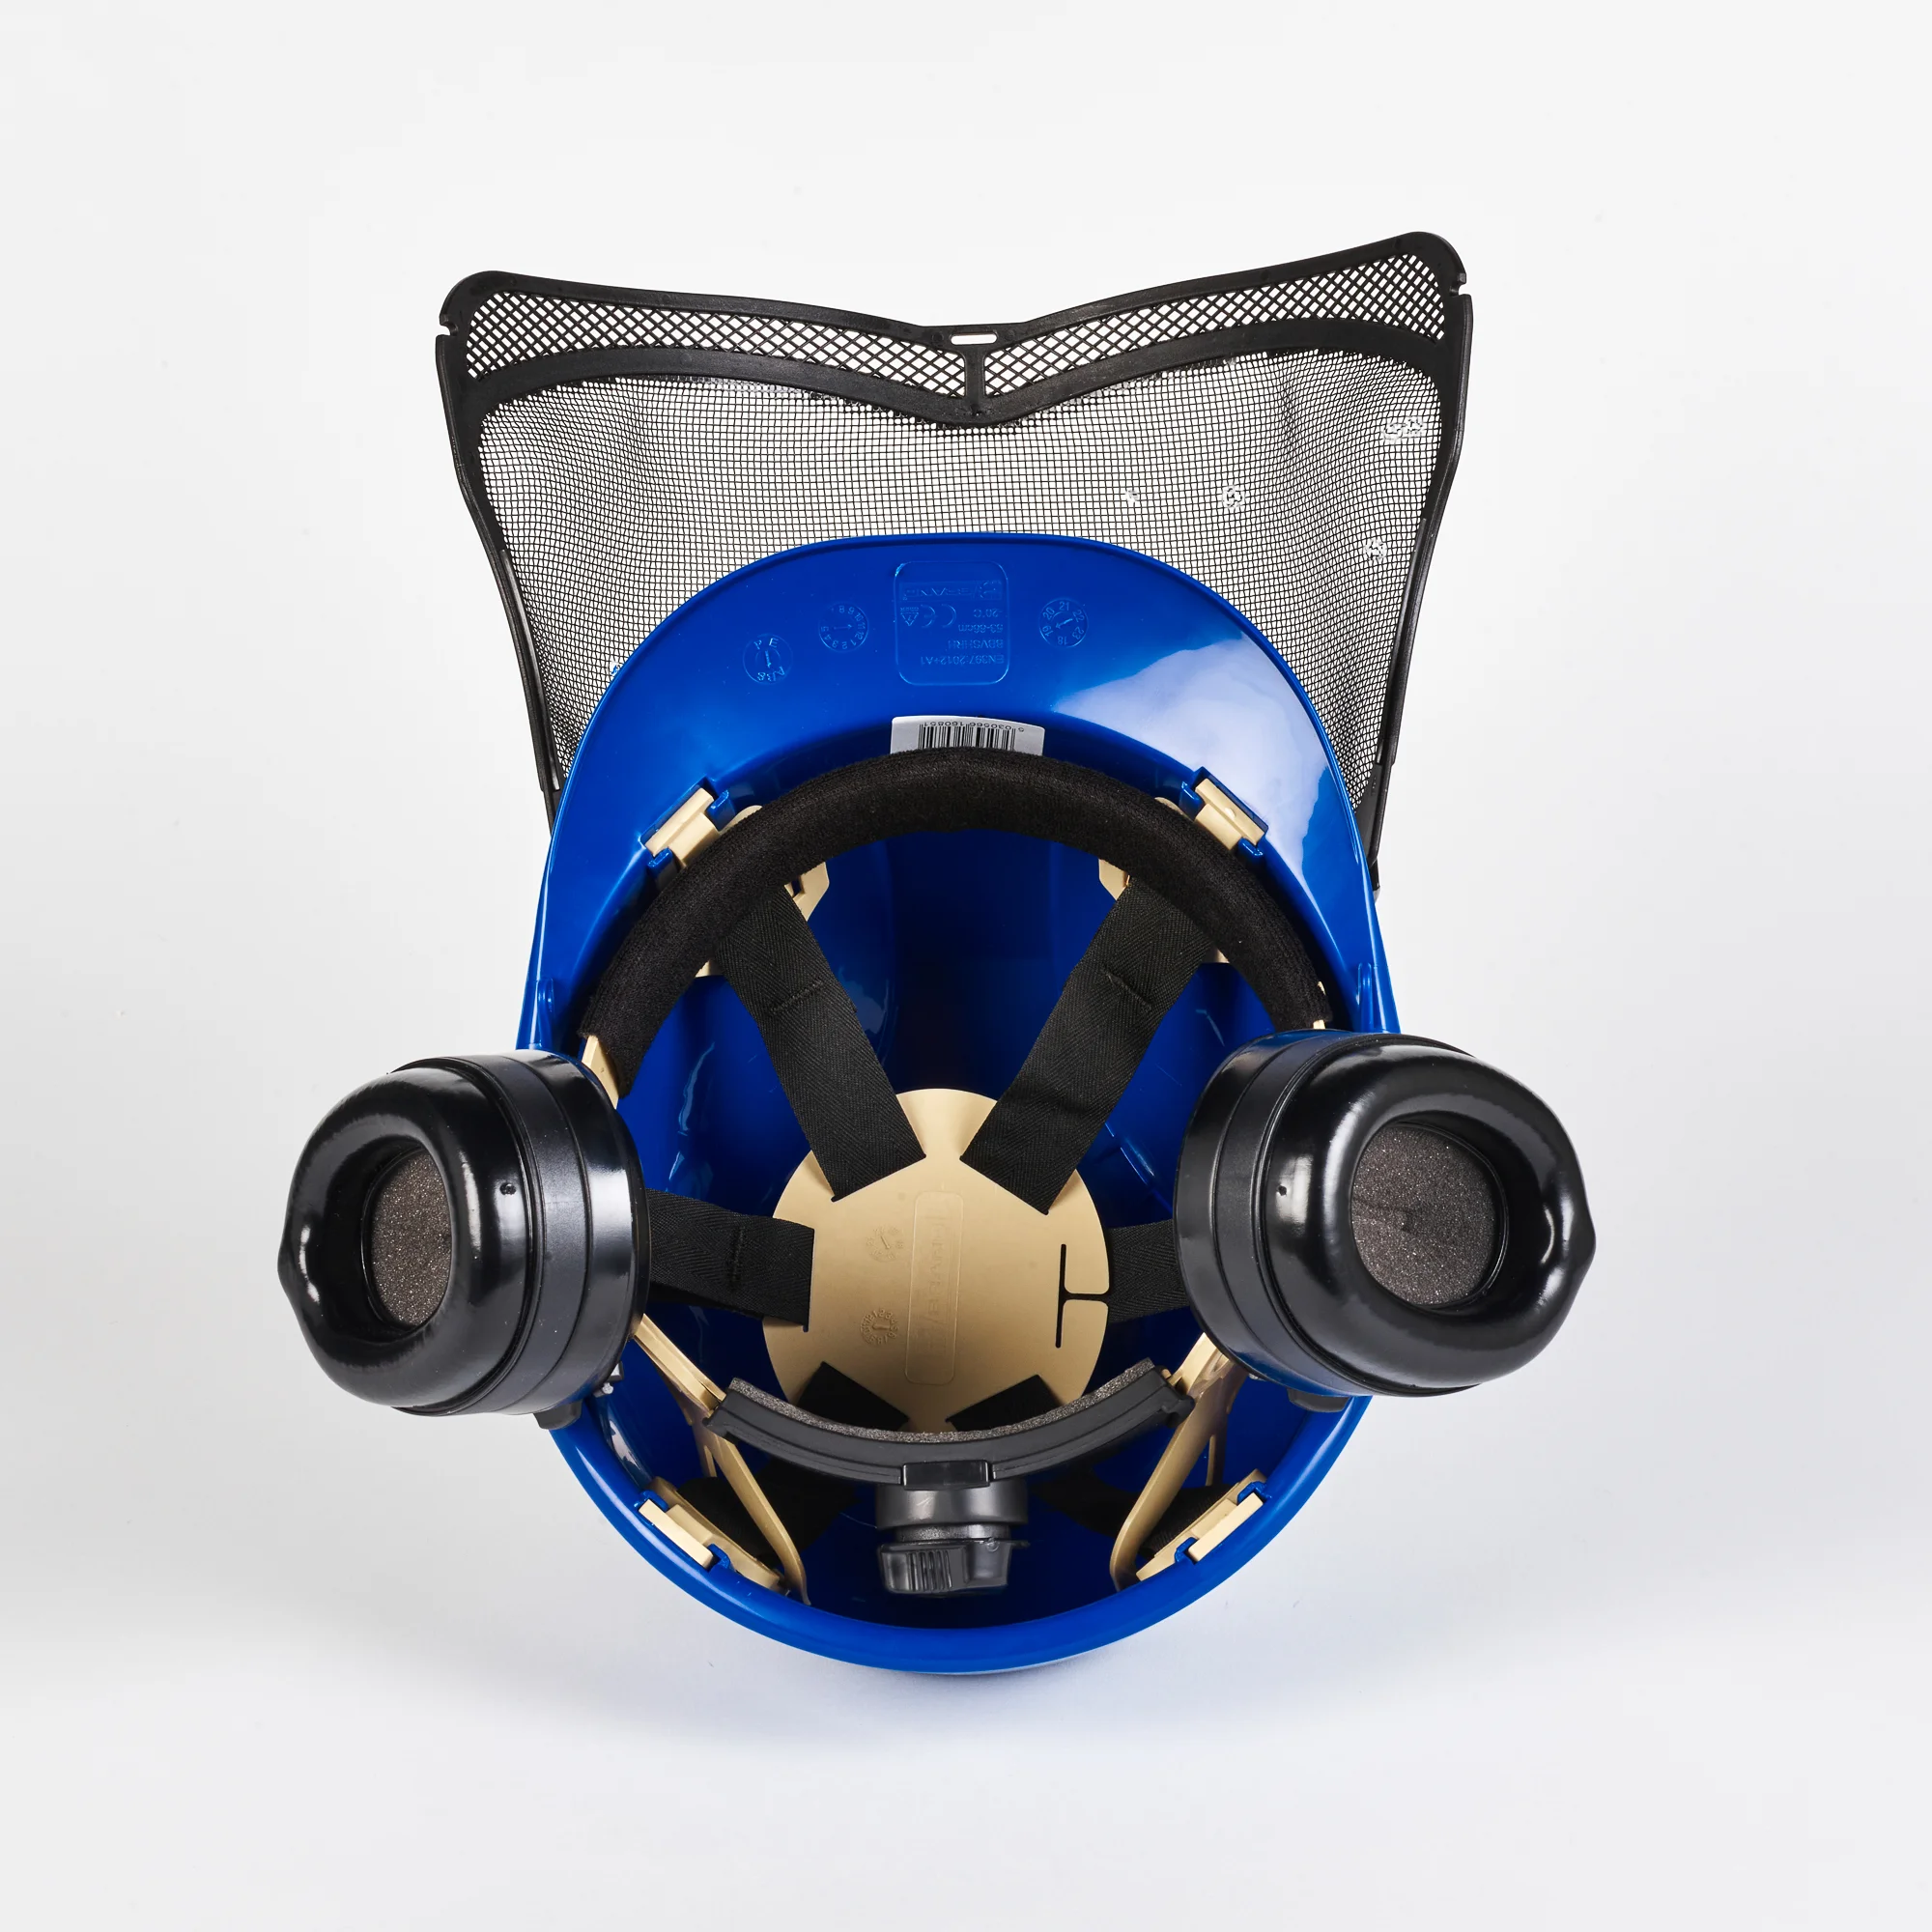 Base Tech Forestry Ground Helmet SNR 31dB (Blue)